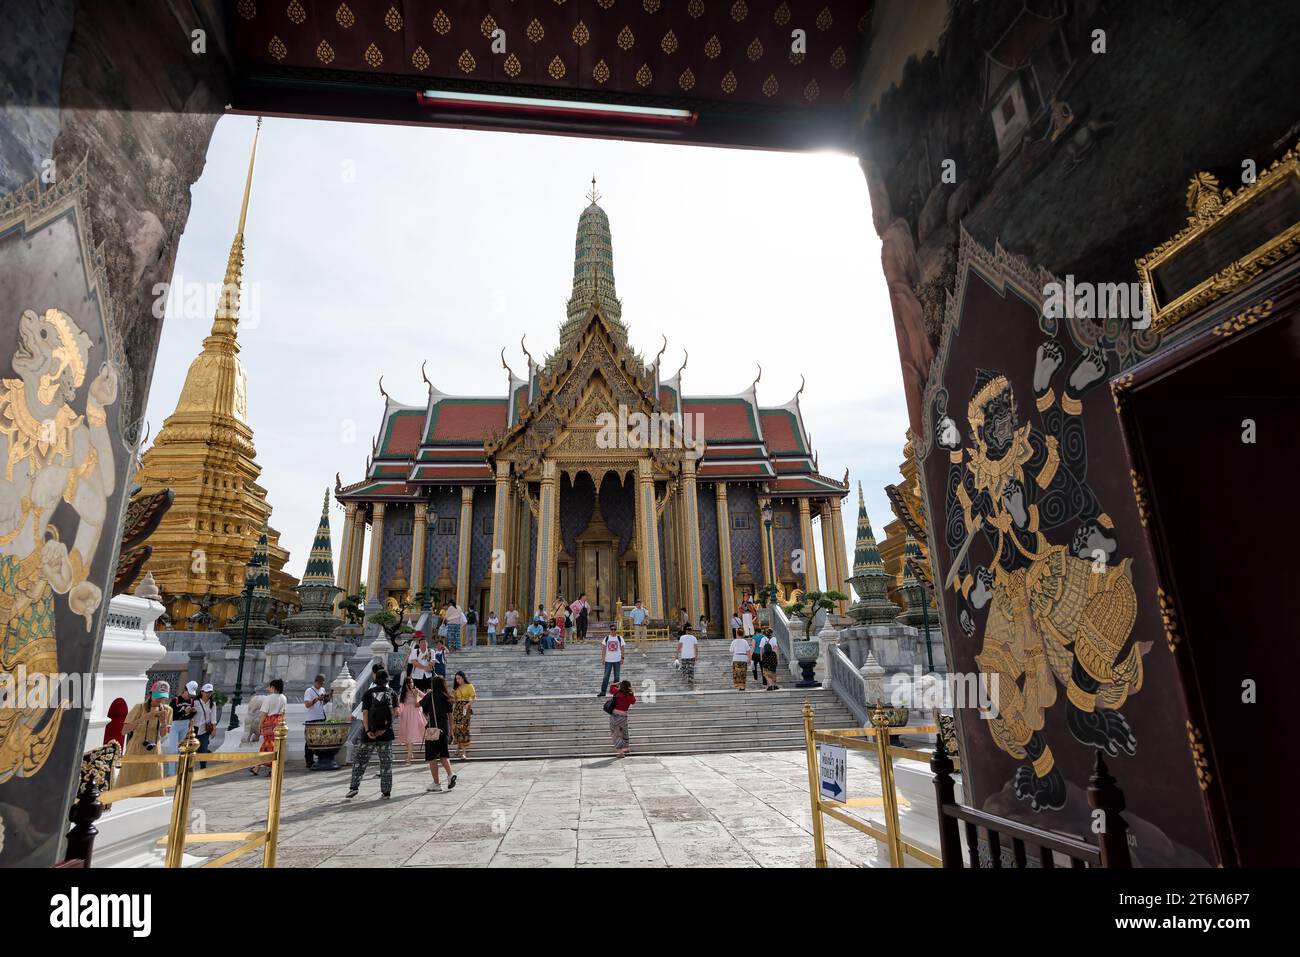 Bangkok, Thailand - Jun 1, 2019: Visitors crowd in Prasat Phra Dhepbidorn or The Royal Pantheon, Grand Palace, Bangkok, Thailand - The Royal Pantheon Stock Photo